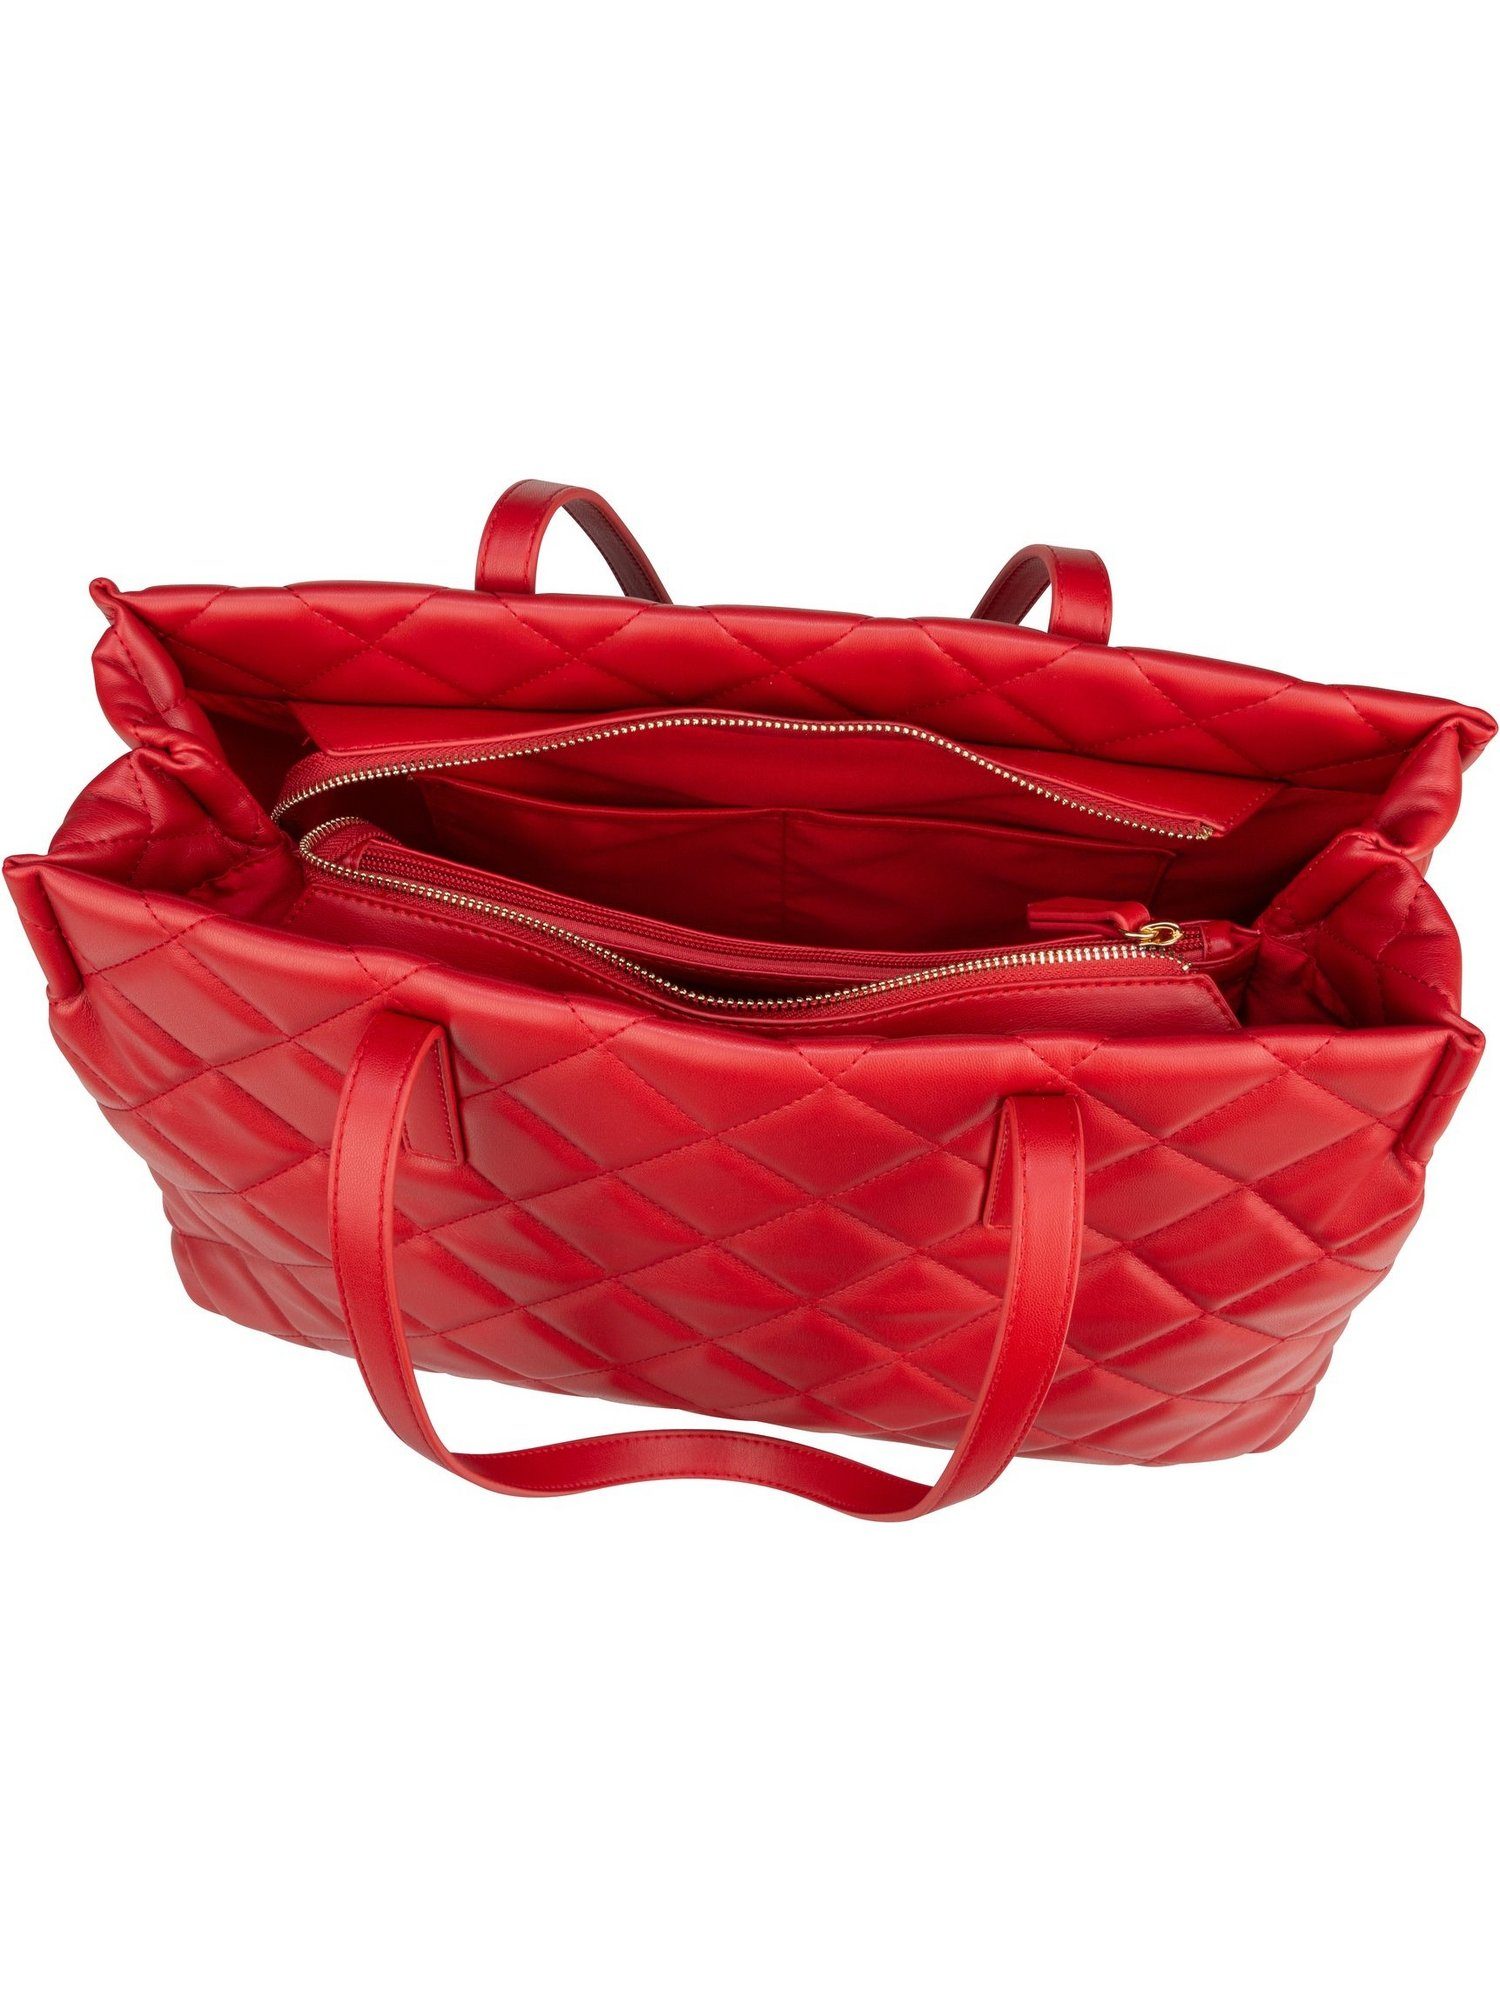 BAGS Shopper Handtasche Rosso Shopping VALENTINO Ocarina K10,